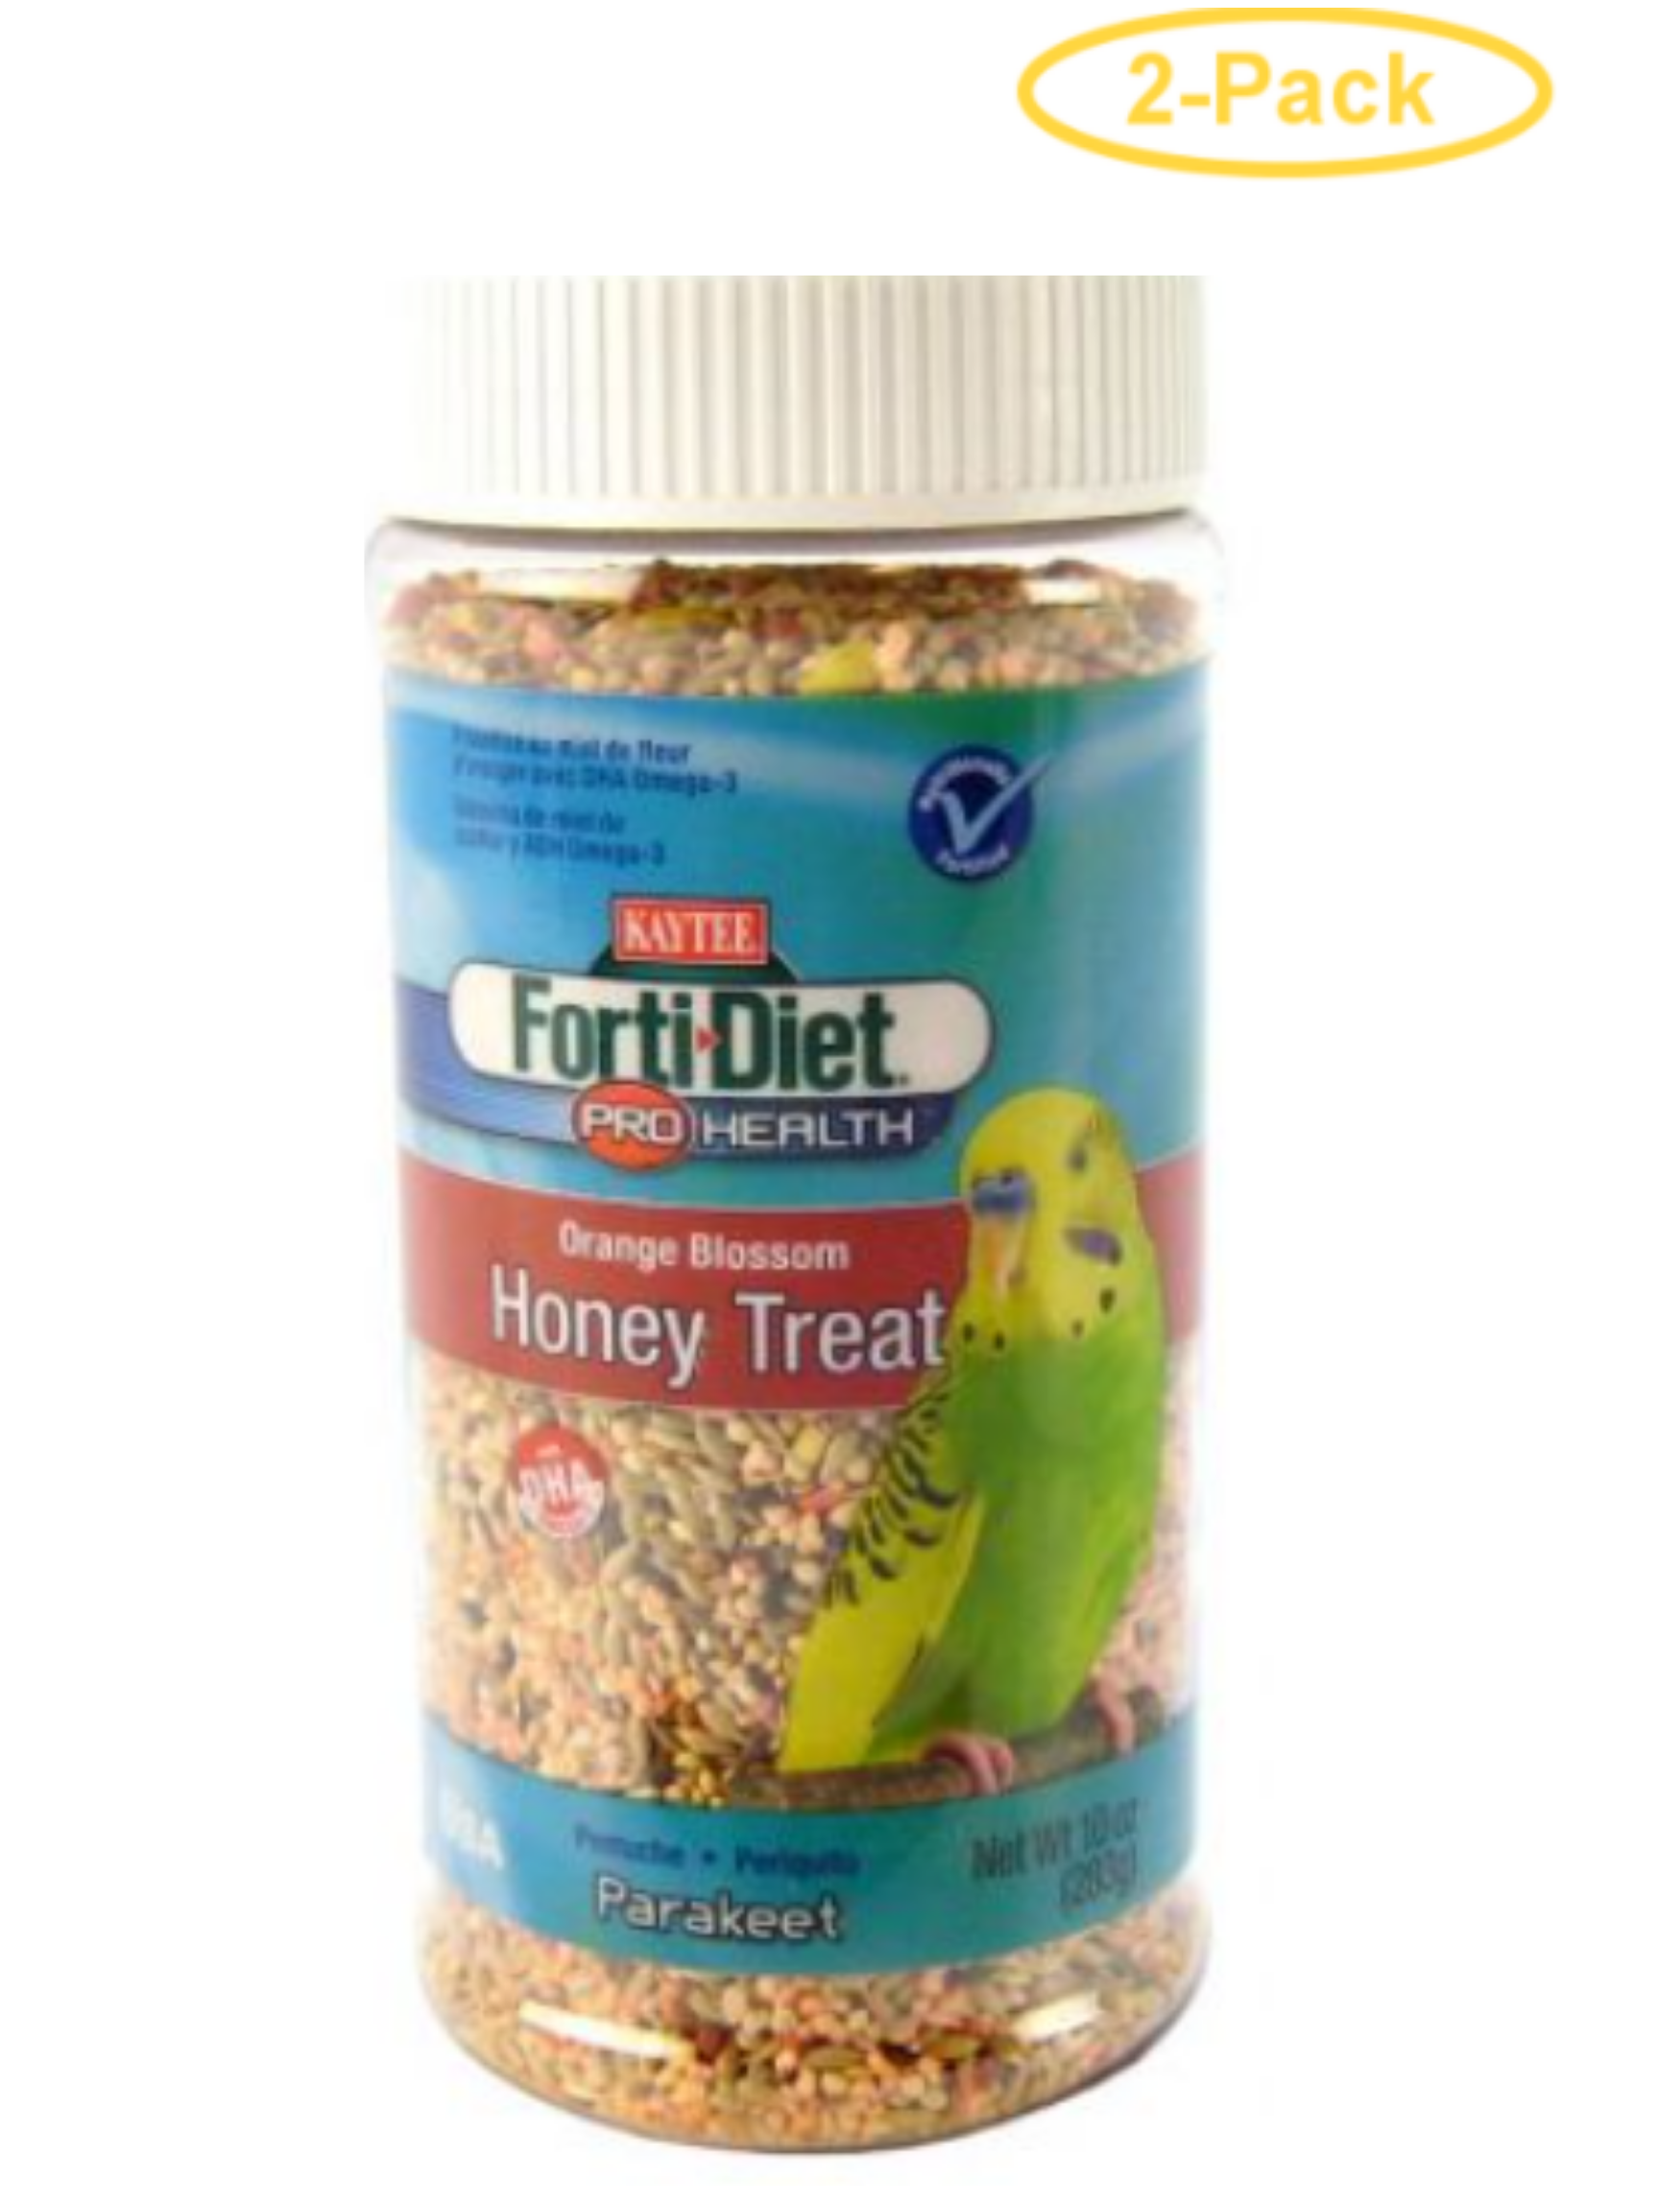 Kaytee Forti-Diet Pro Health Orange Blossom Honey Treat - Parkeet 10 oz- pack of 2 - image 1 of 1